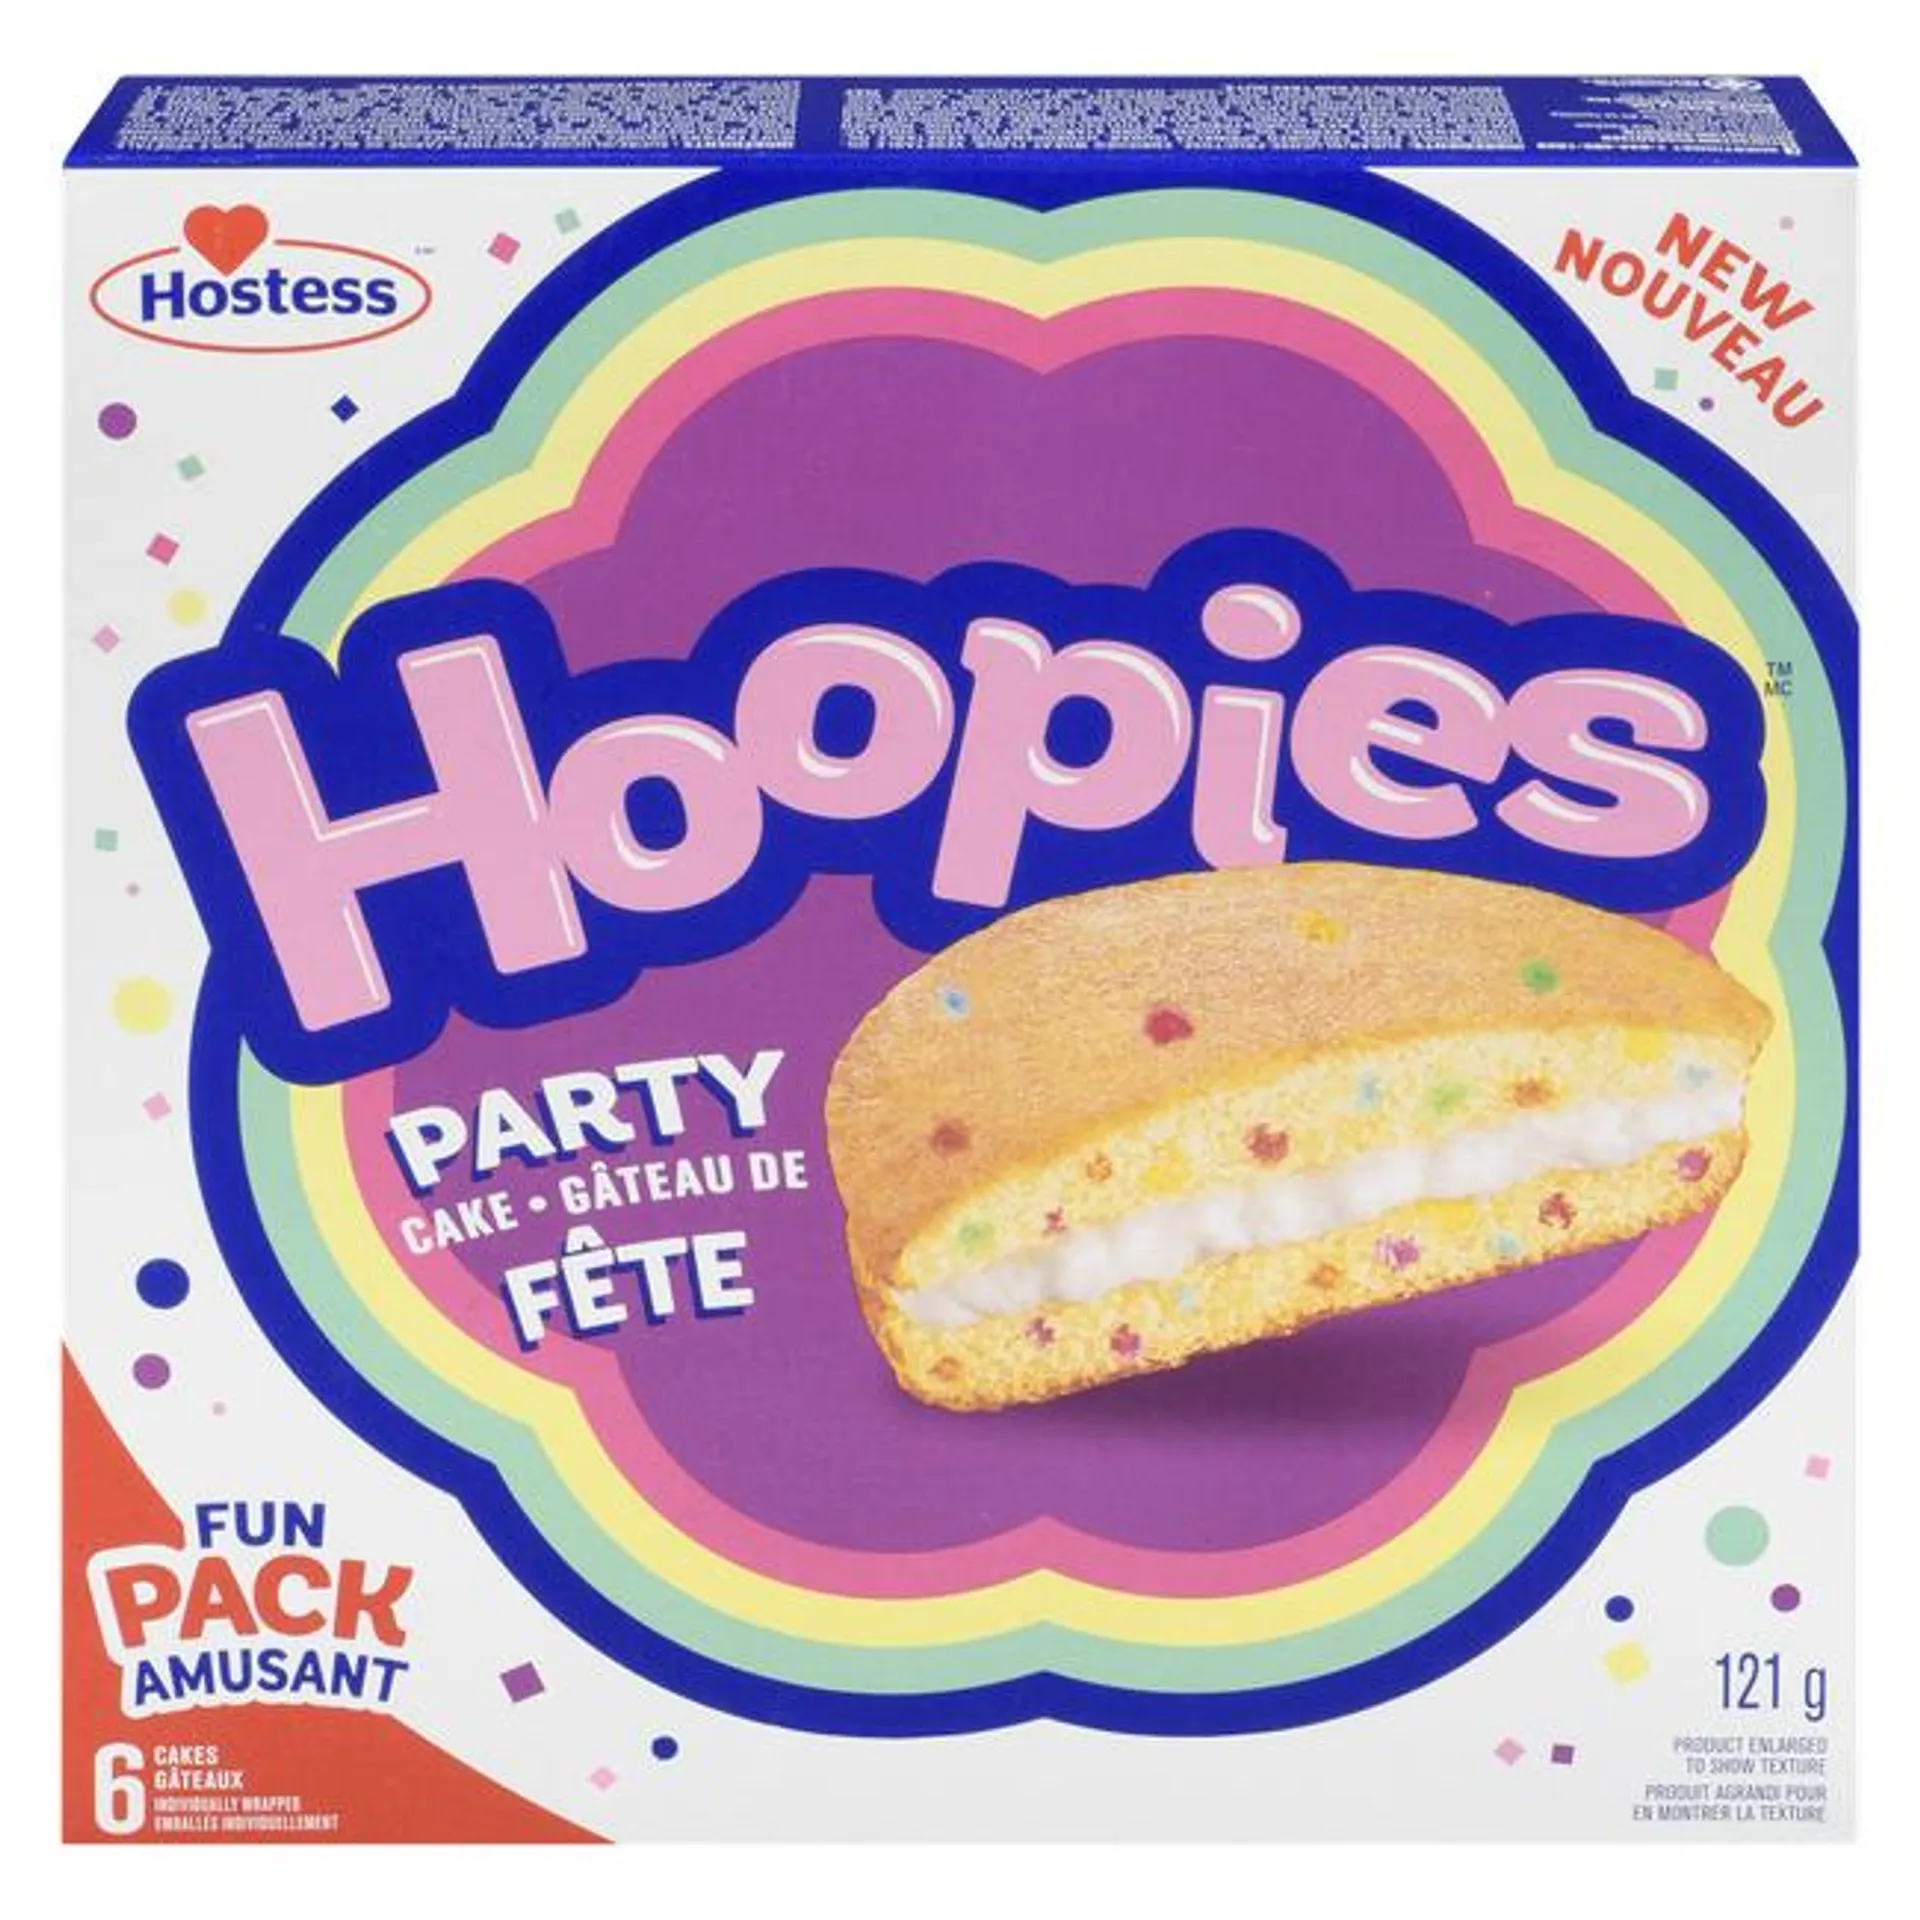 Hostess Hoopies Party Cake